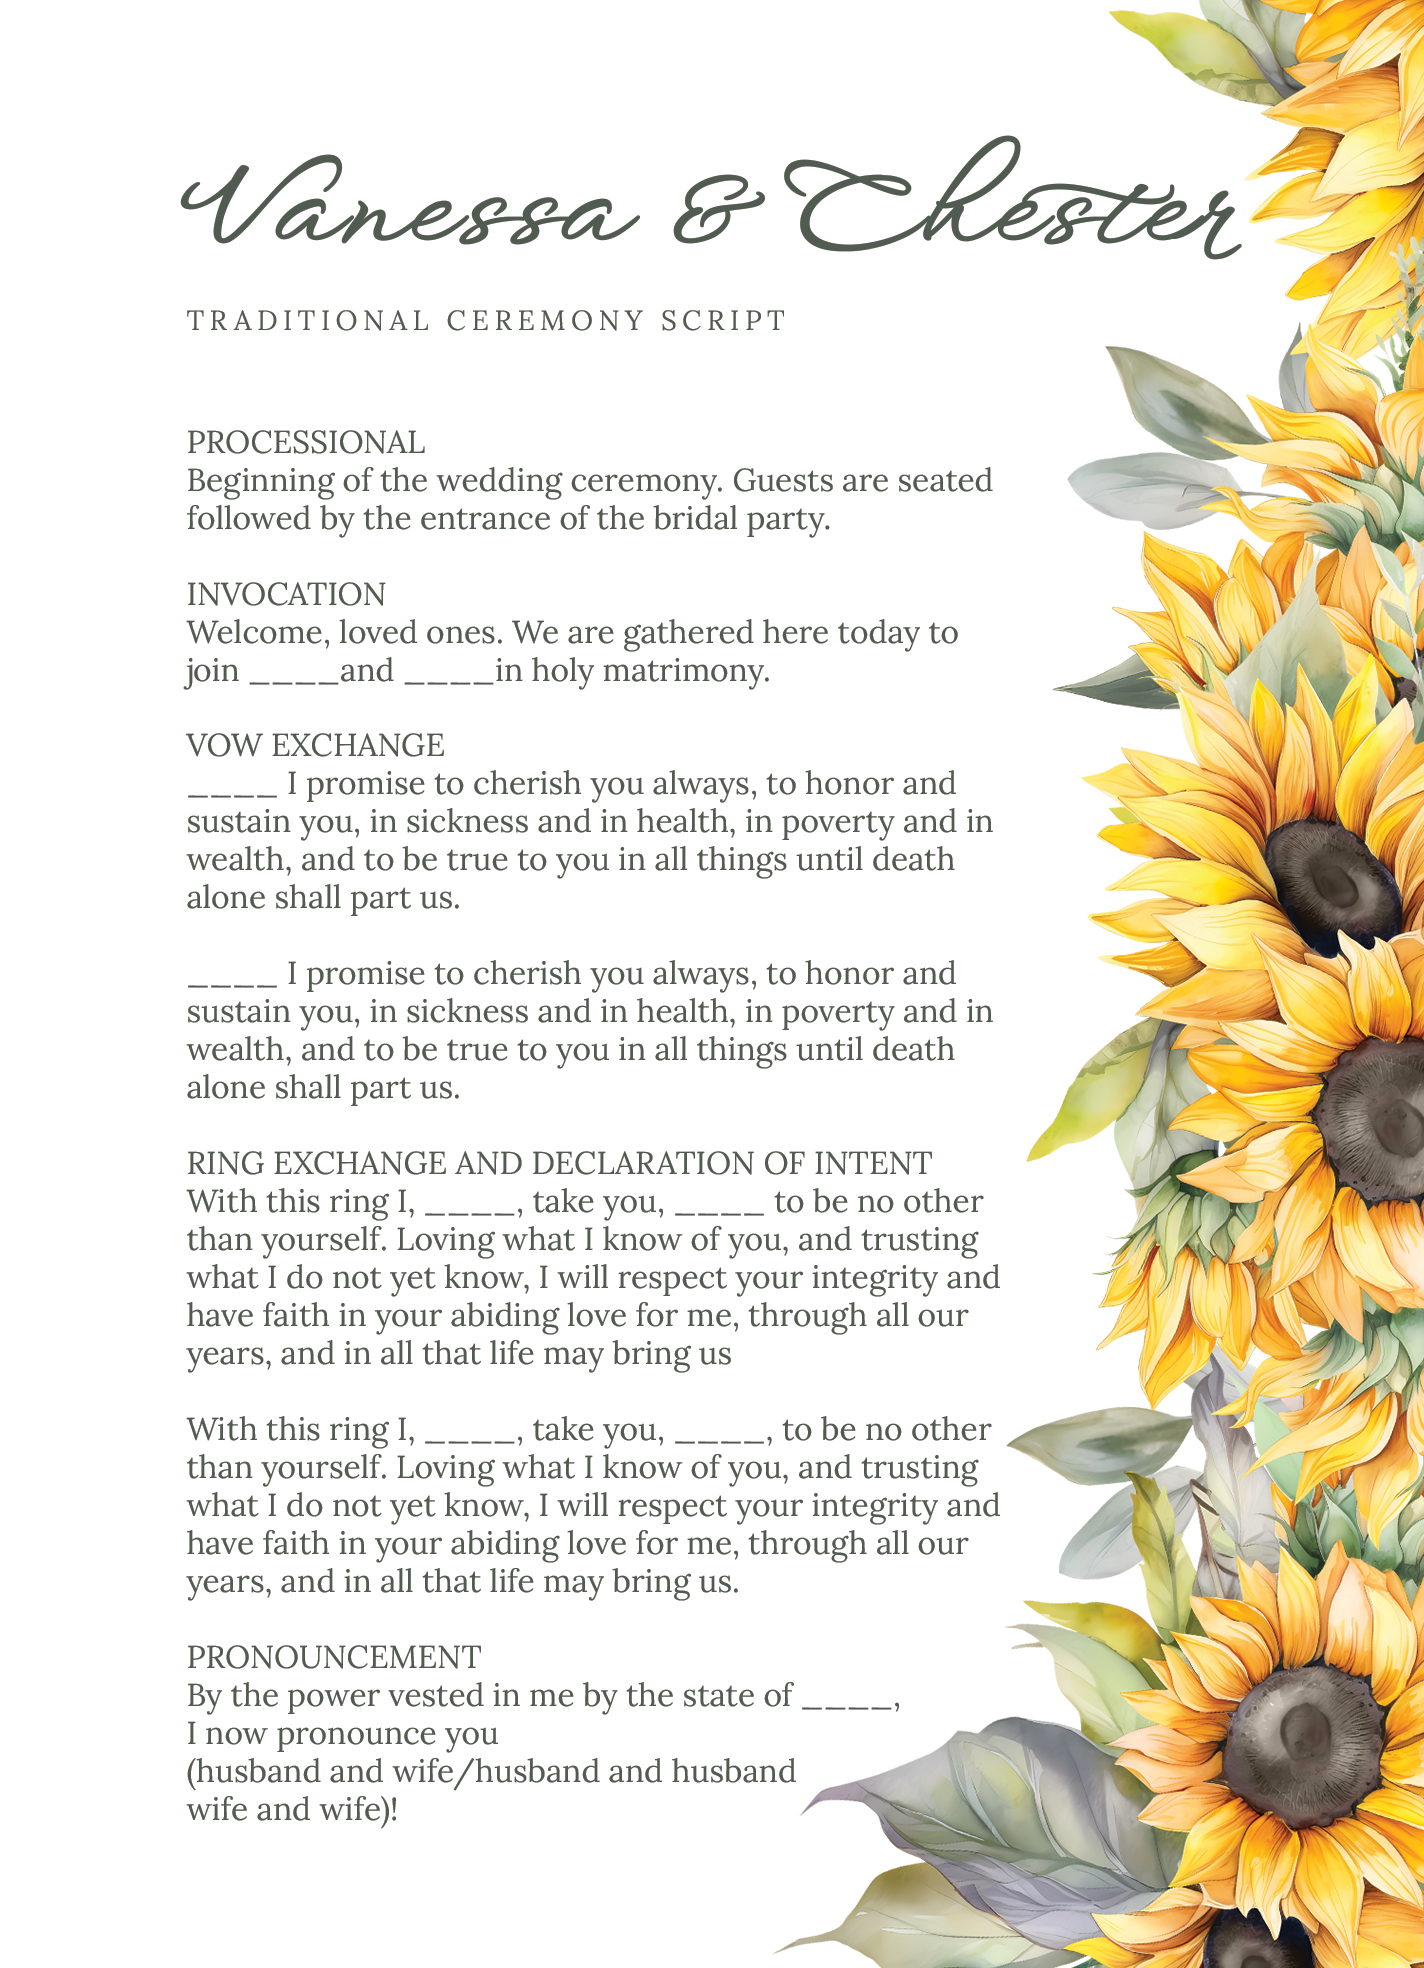 Sunflower Wedding Ceremony Script Free Google Docs Template - gdoc.io